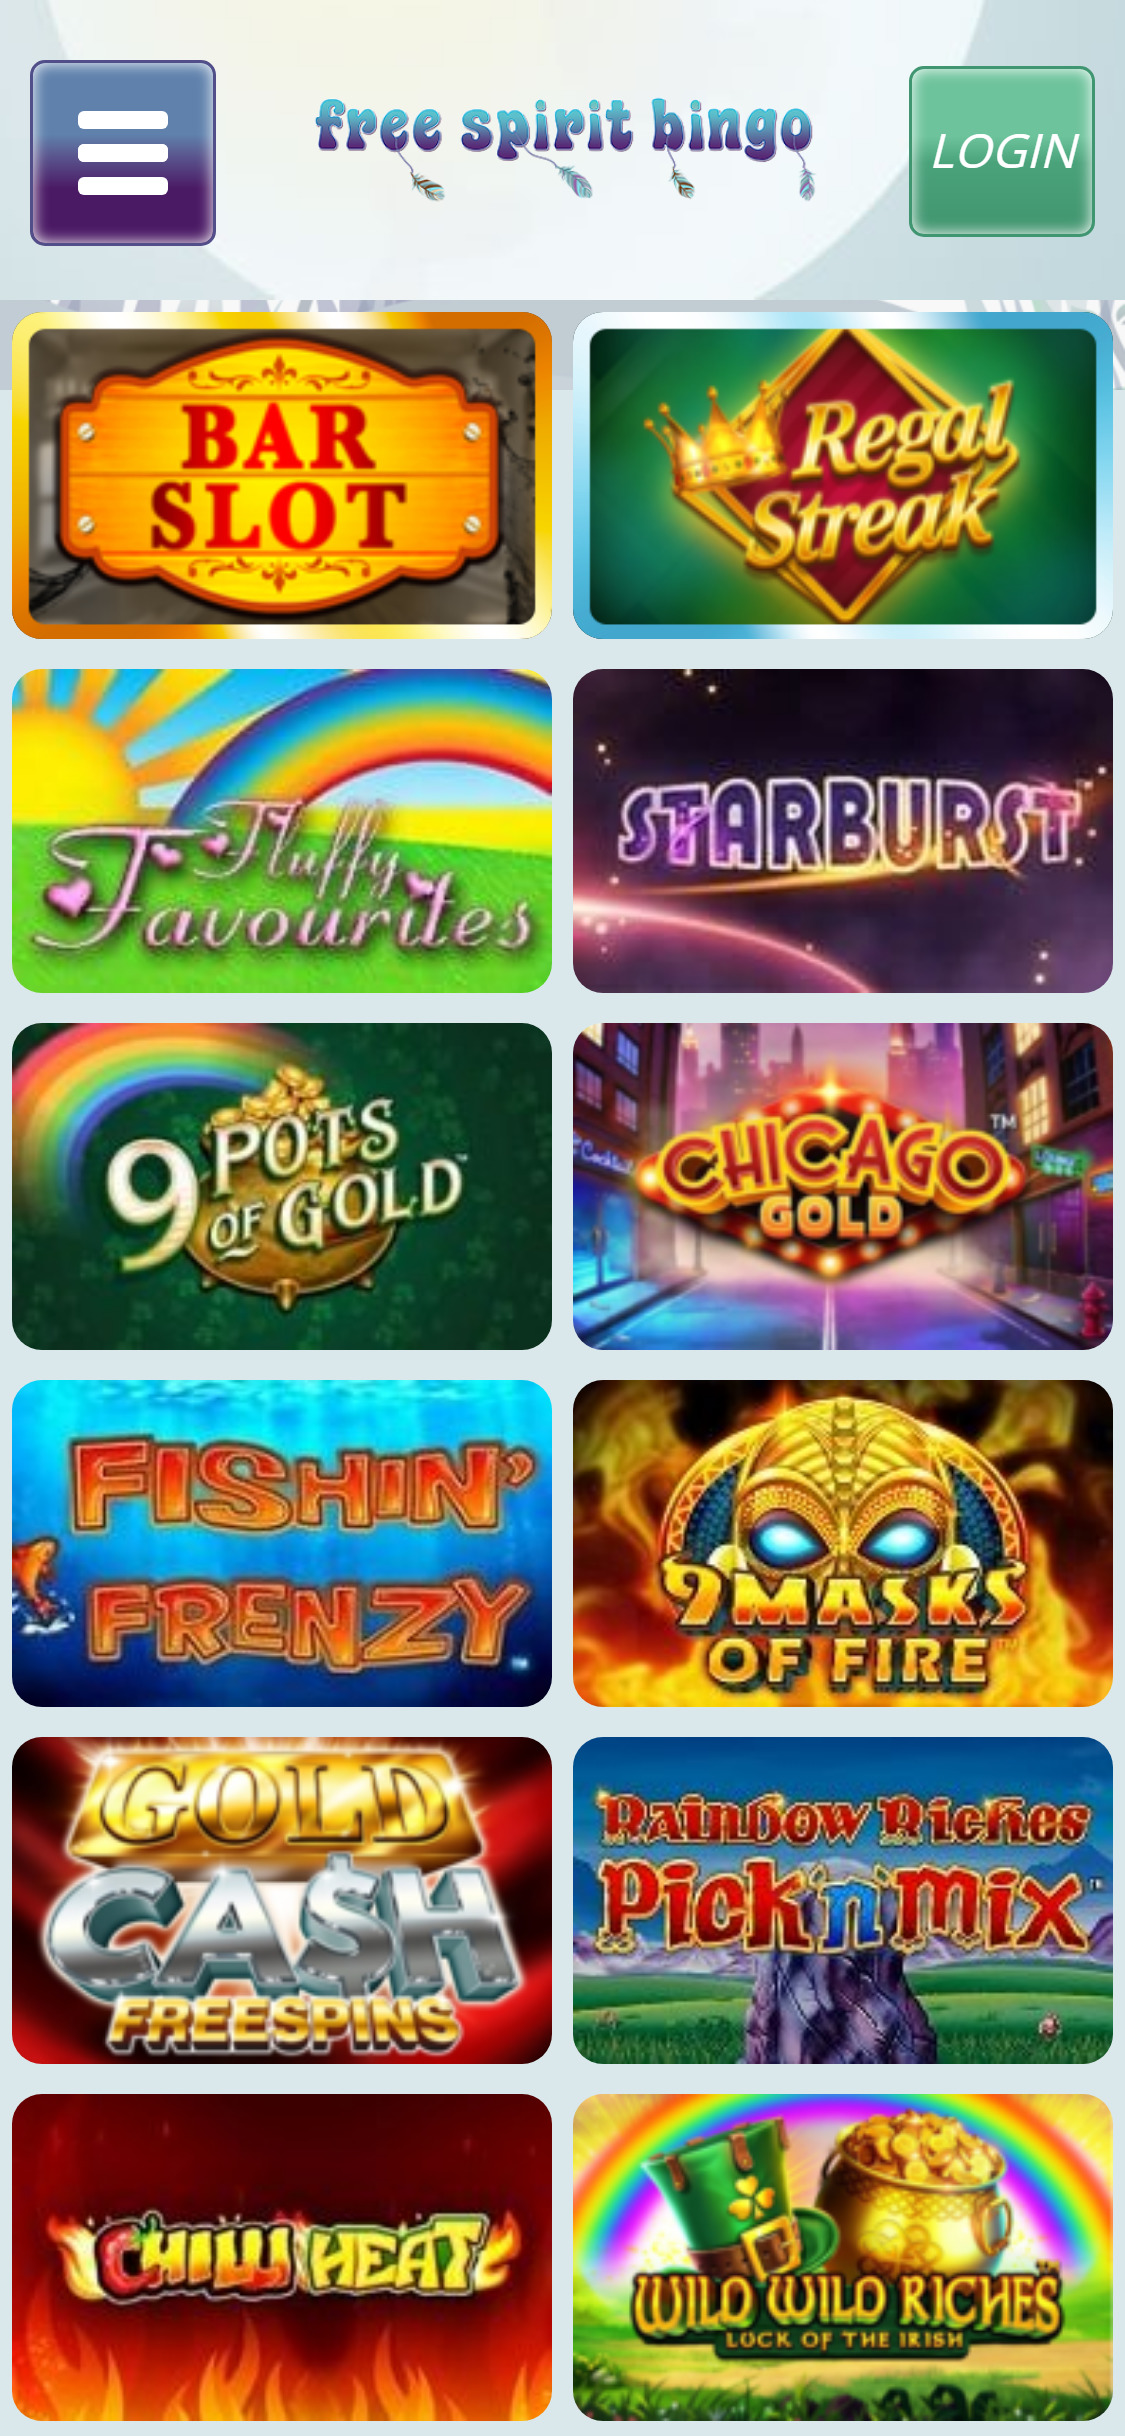 Free Spirit Bingo Casino Mobile Games Review